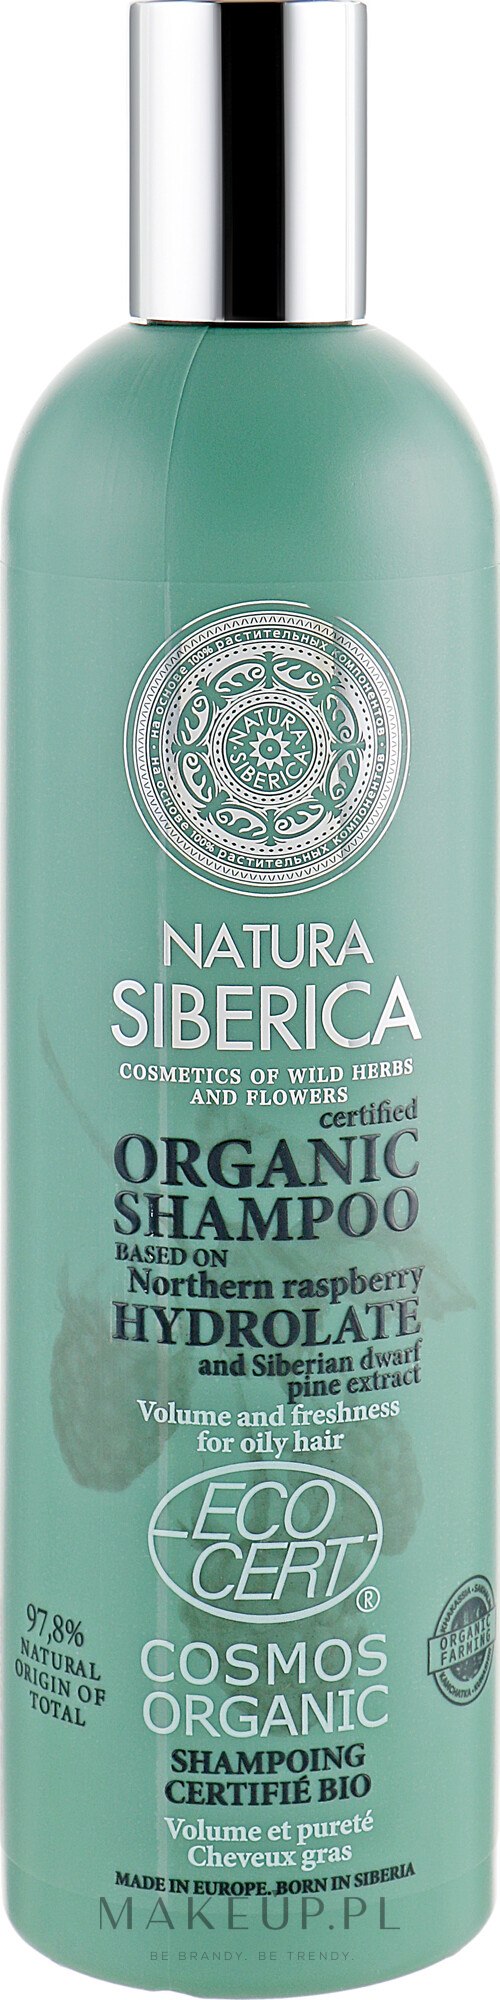 natura siebrica szampon